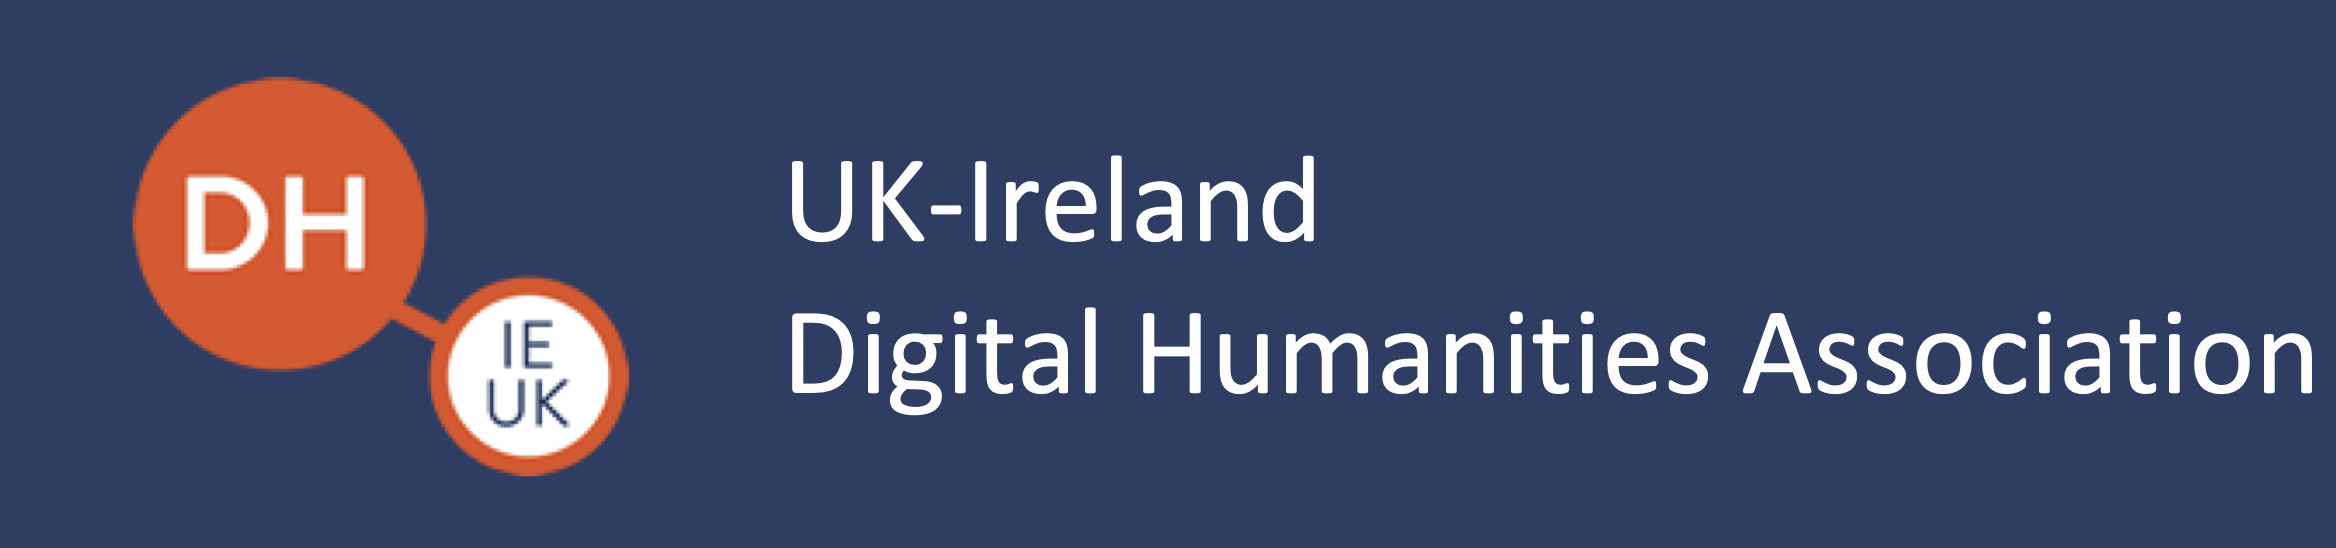 UK-Ireland Digital Humanities Association